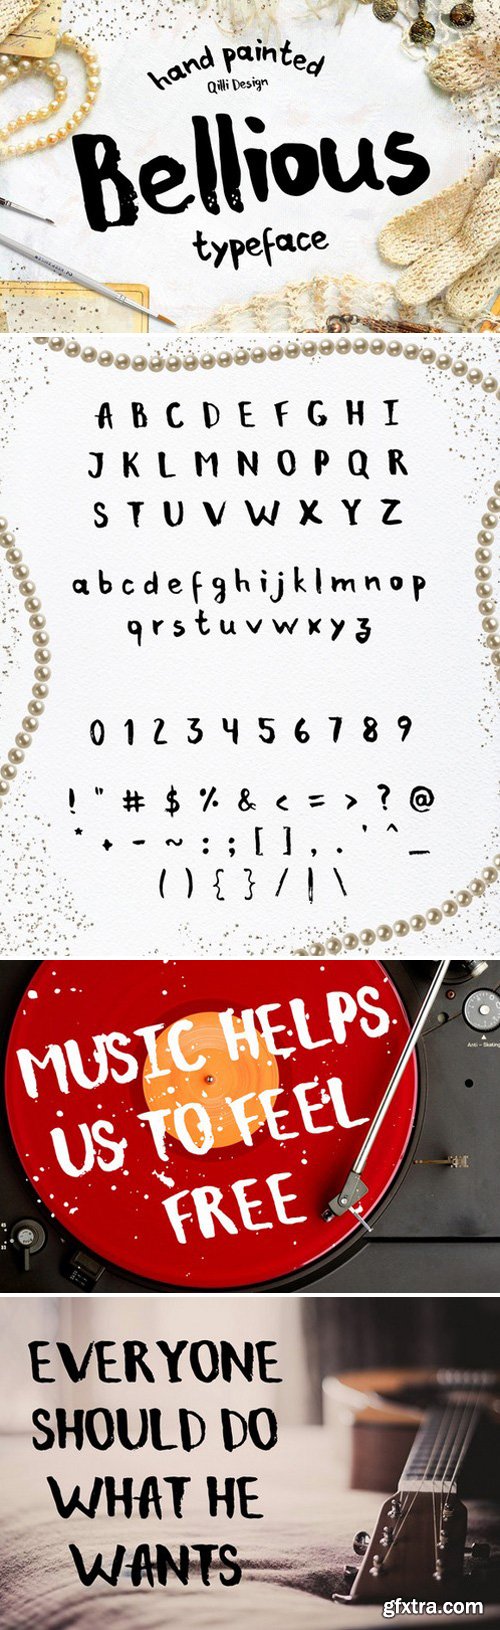 CM285776 - Bellious hand drawn typeface